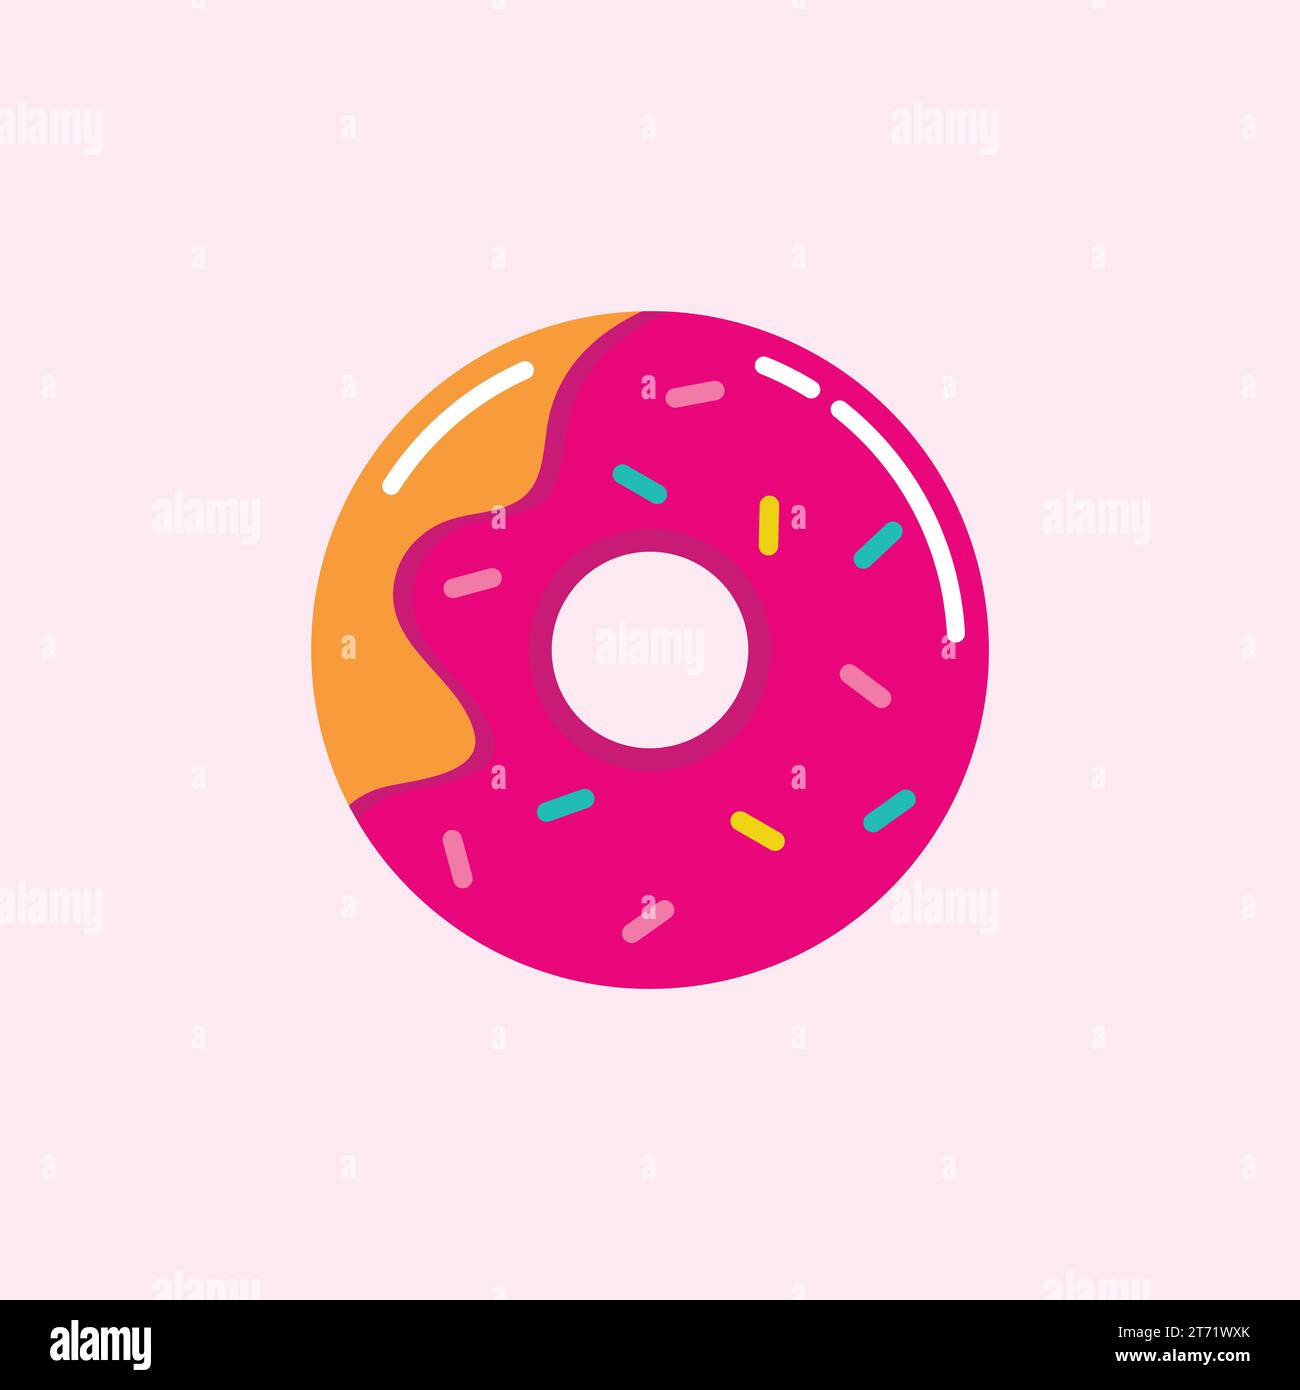 Süße Erdbeere Donut Vektor Illustration. Amerikanisches traditionelles Essen Stock Vektor